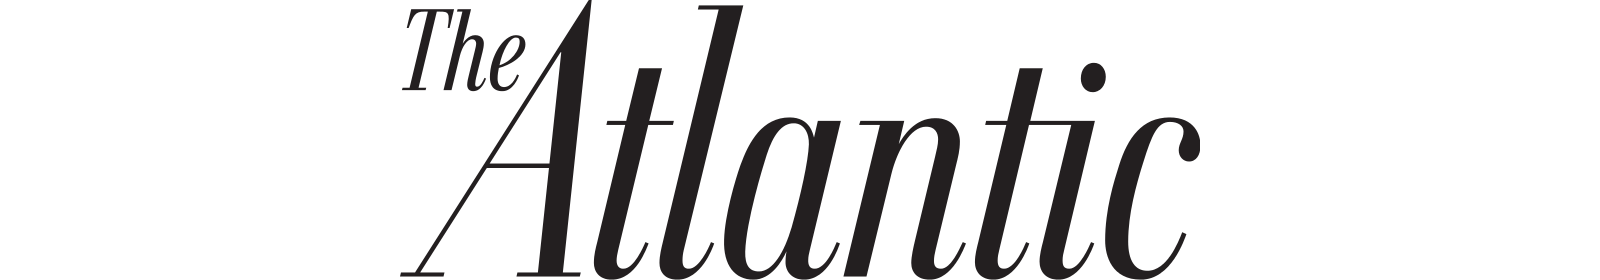 Atlantic-logo--resized.png